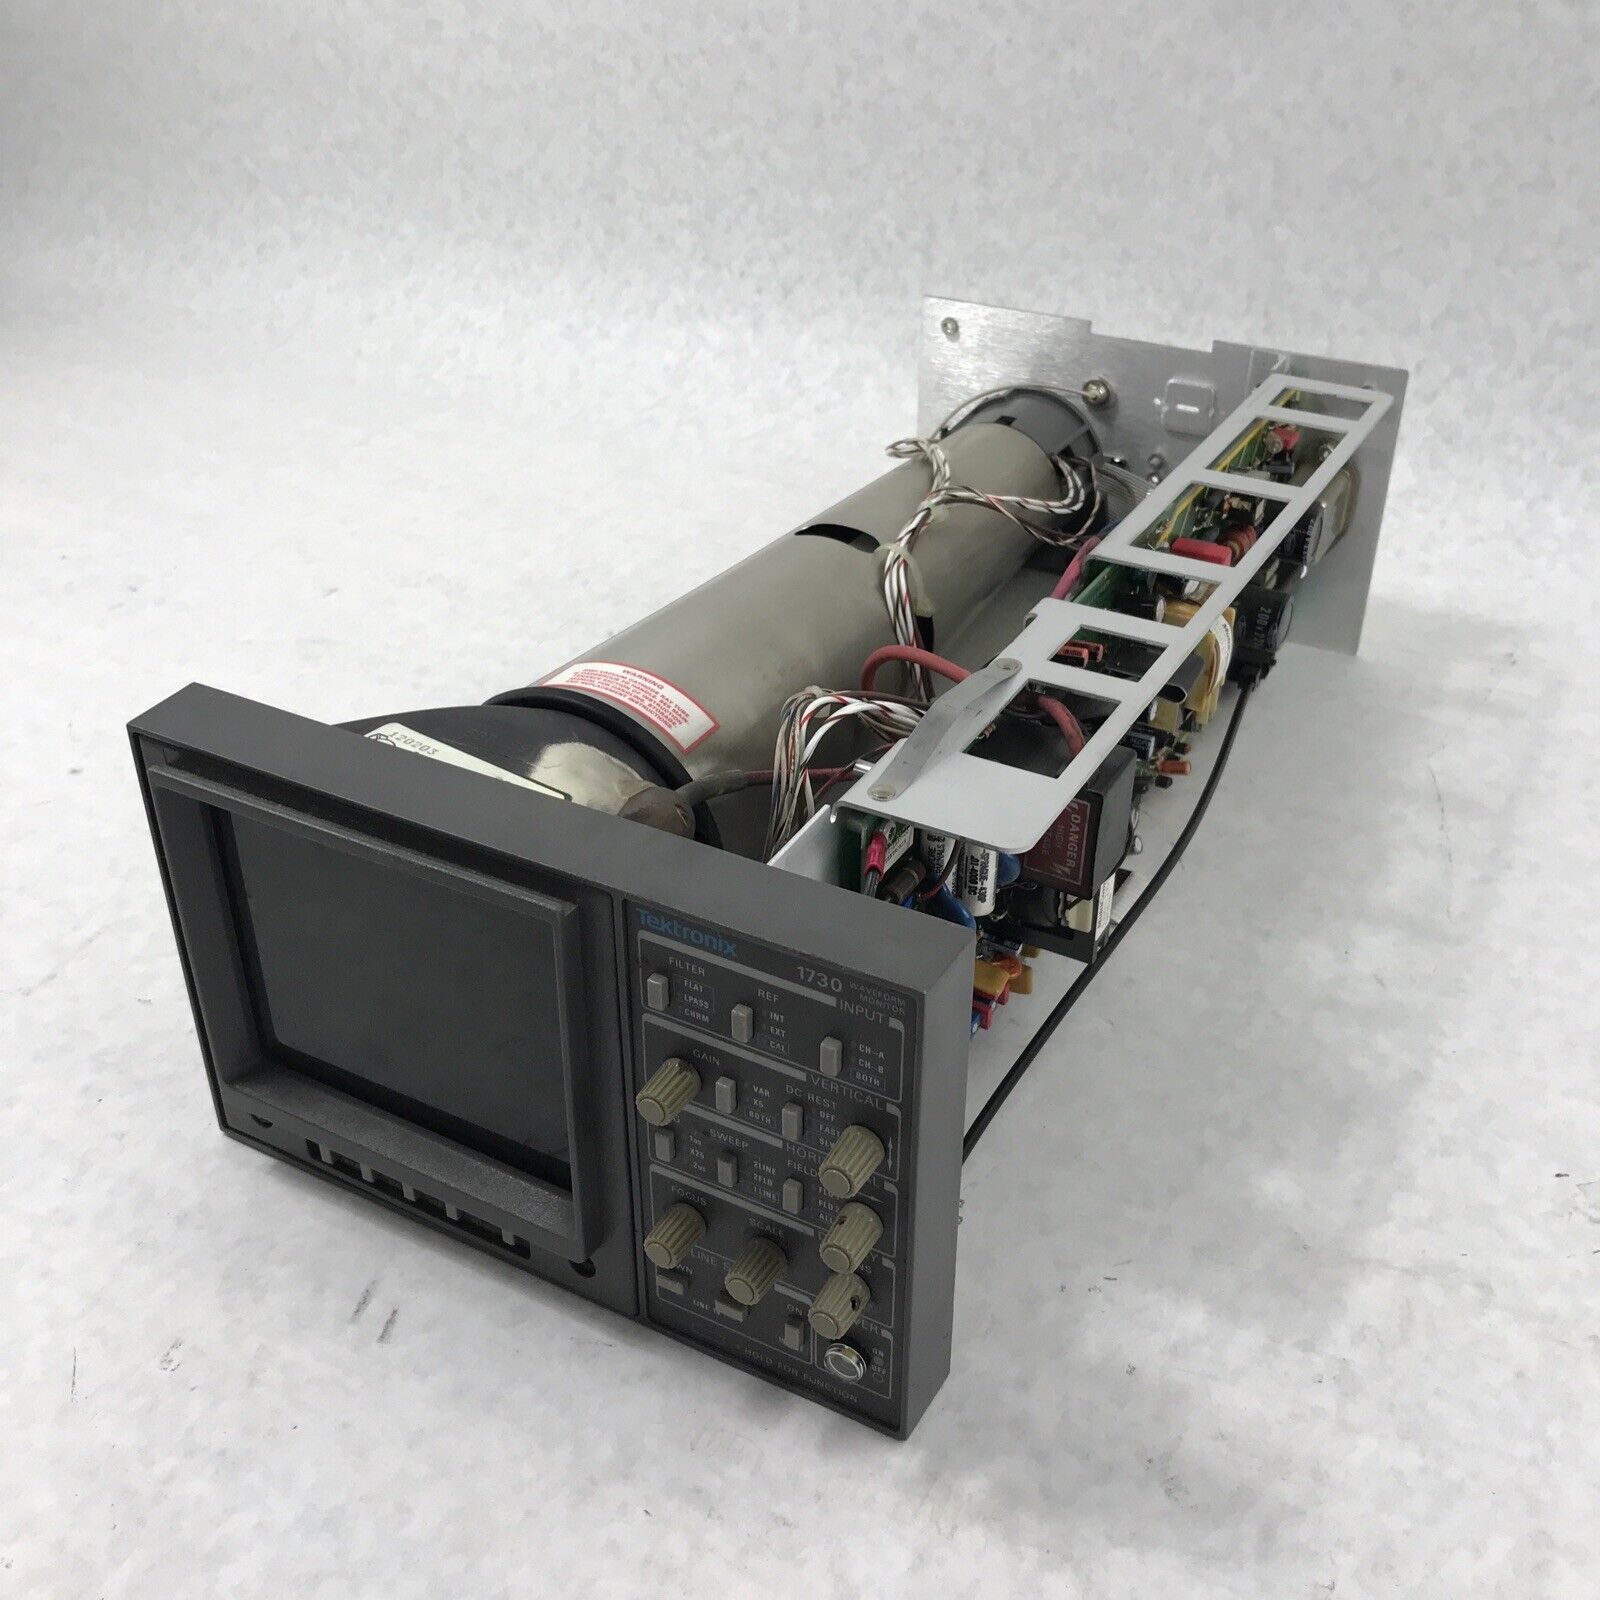 Professional Tektronix 1730 Analog Waveform Display Monitor